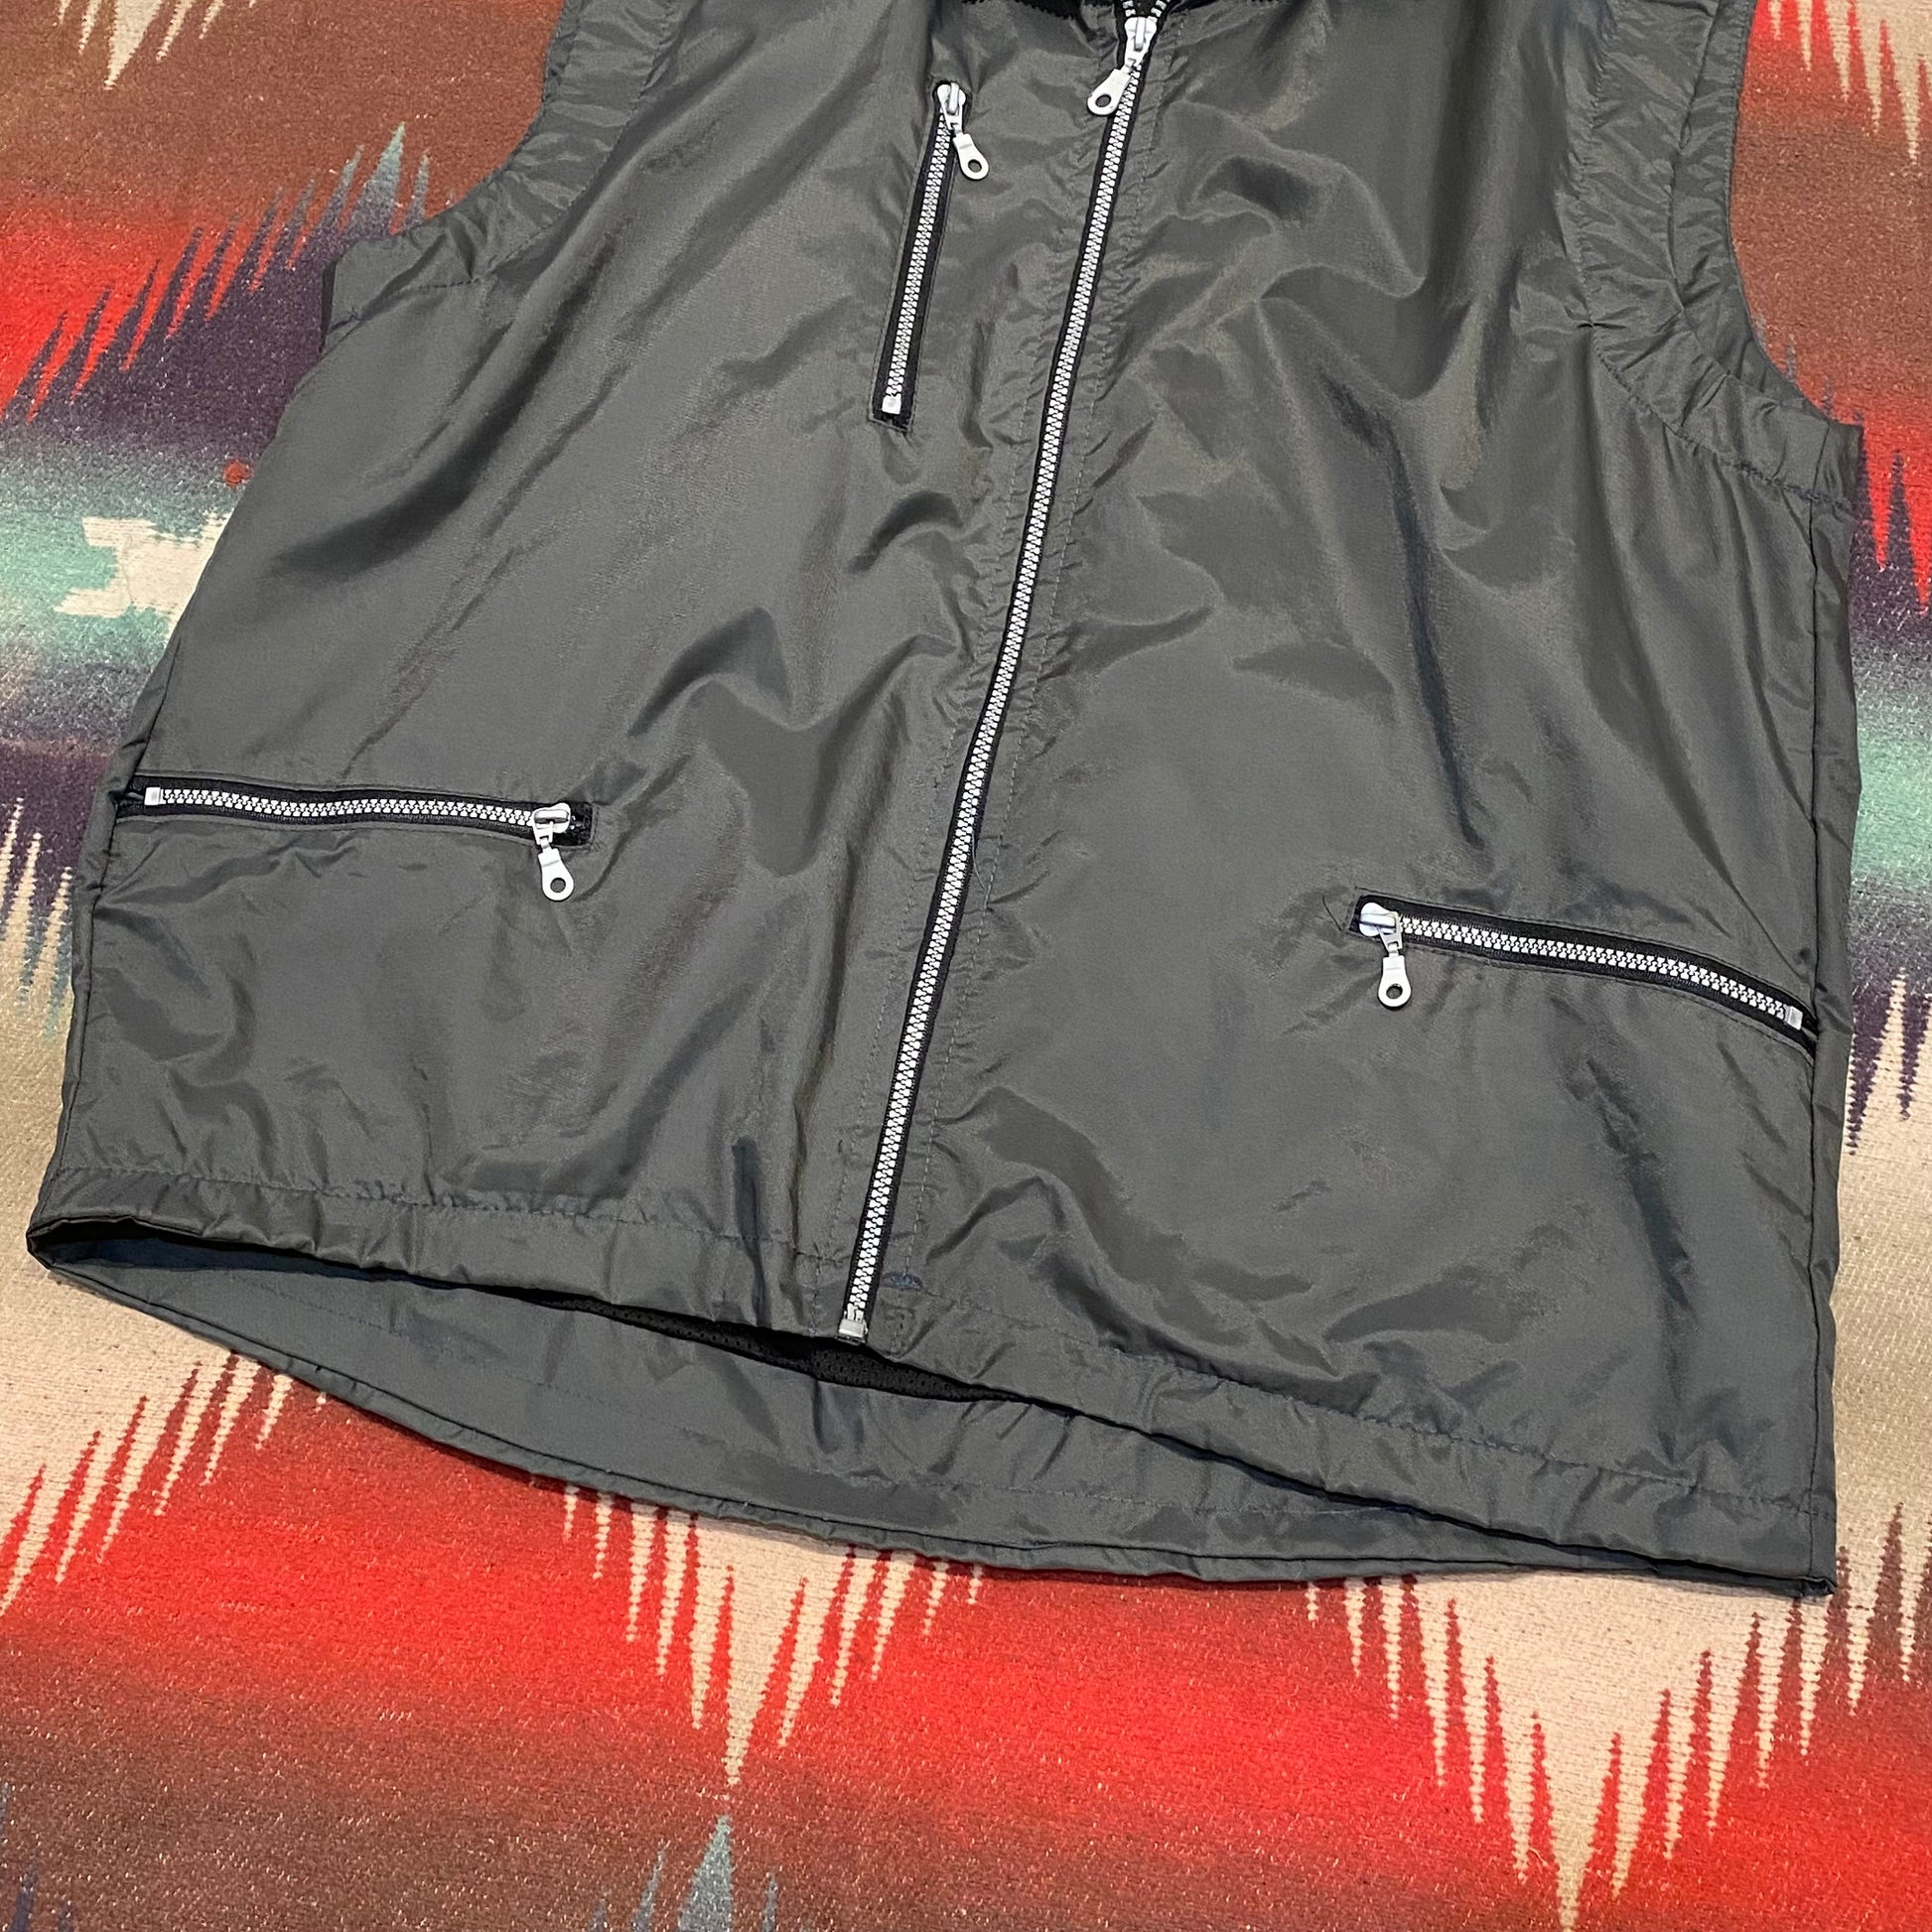 2000s 2001 Y2K XBox Video Game Nylon Windbreaker Vest Jacket Size L/XL